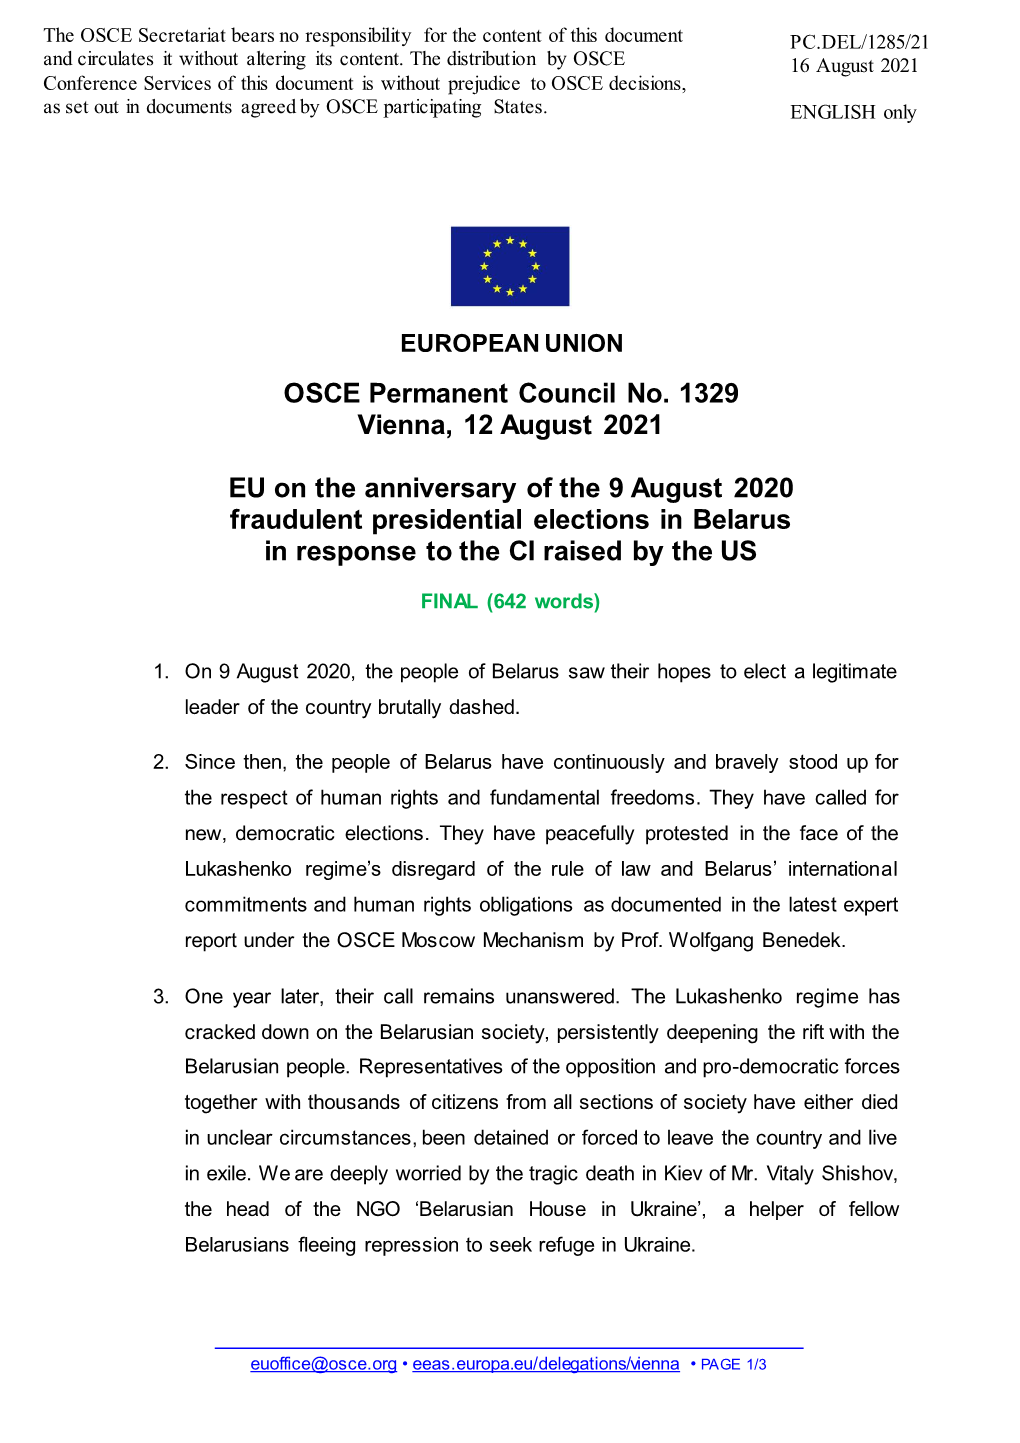 OSCE Permanent Council No. 1329 Vienna, 12 August 2021 EU on The